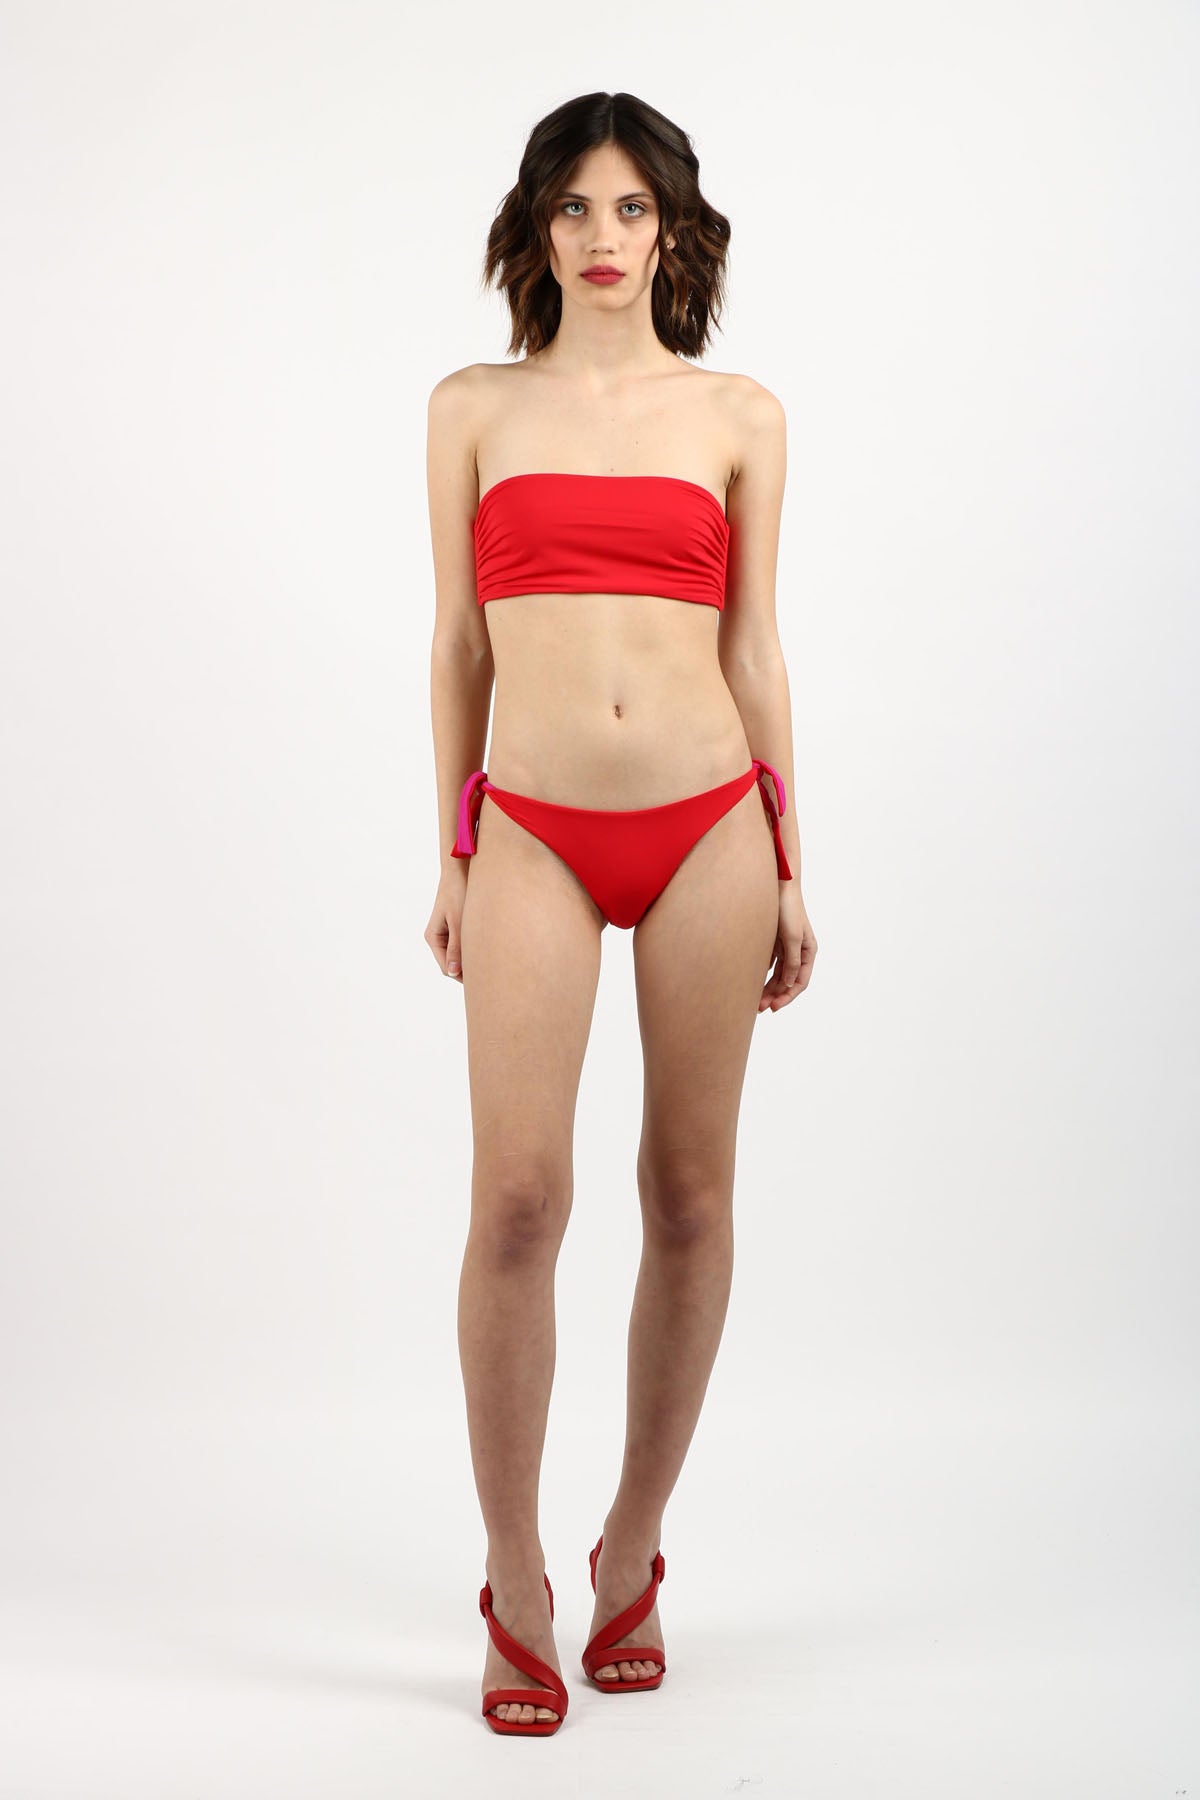 FISICO Costume Bikini a Fascia Double Face Rosso e Fucsia Rosso/fuxia